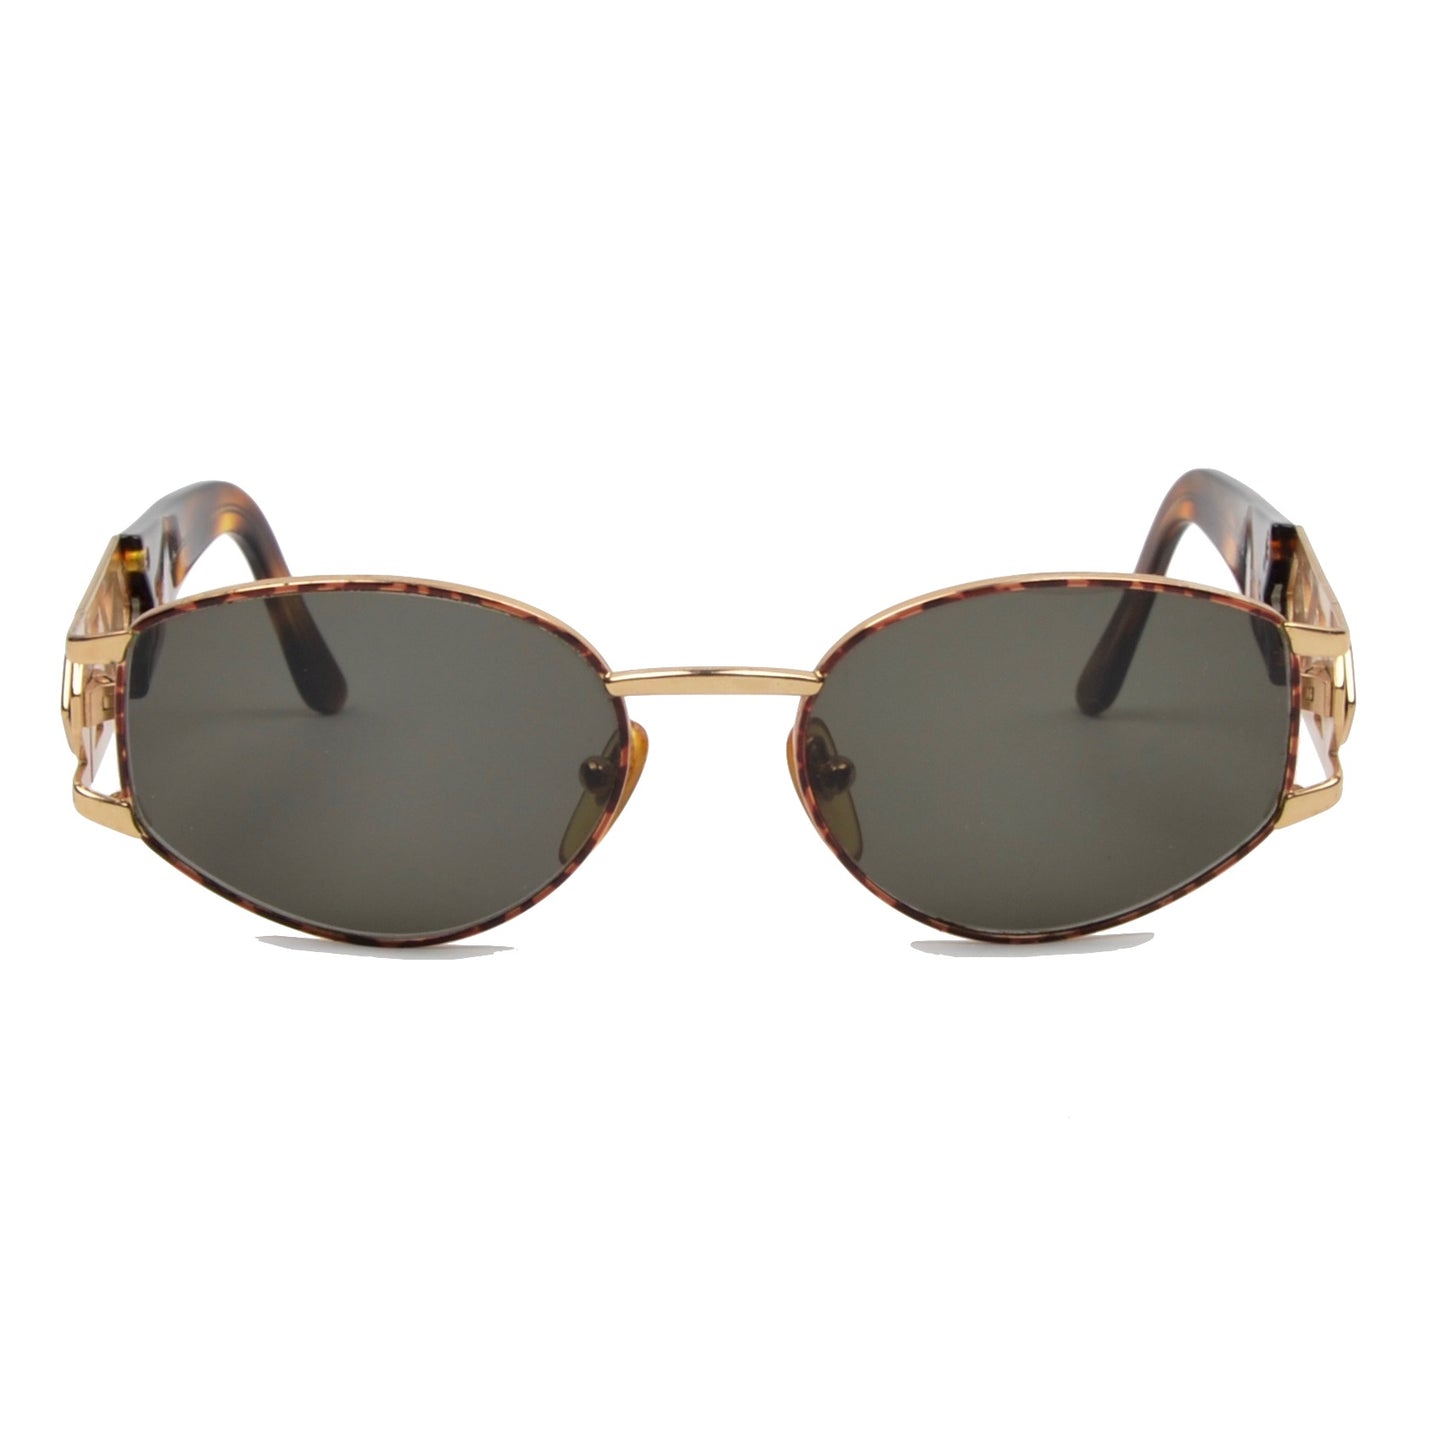 Vintage Genny 5008 Sunglasses - Gold